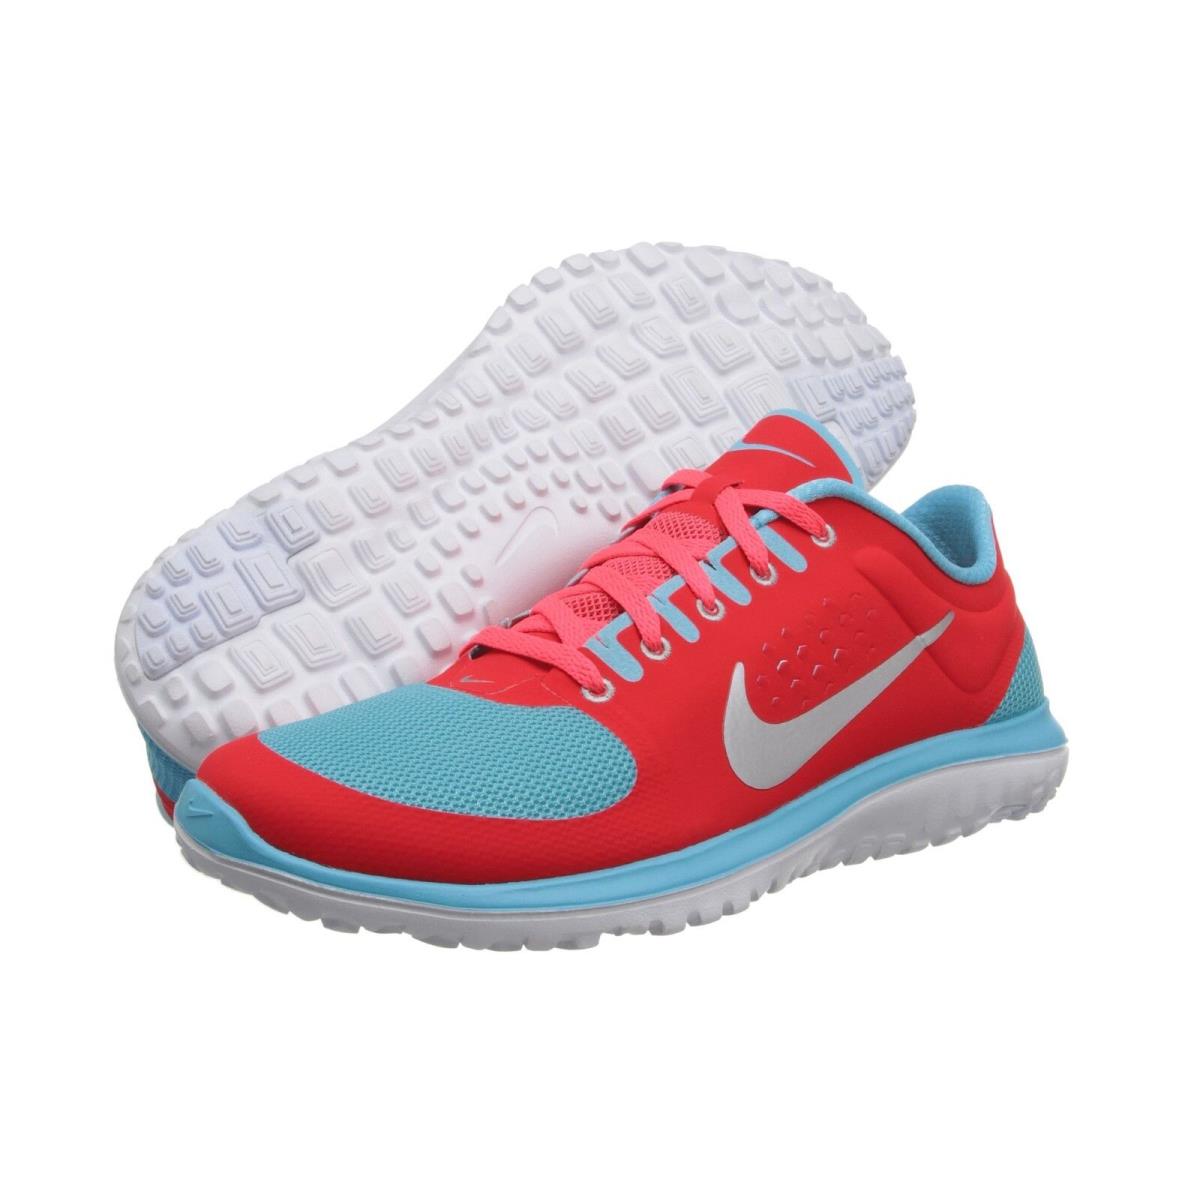 Womens Nike FS Lite Run Sneakers Shoes - 10.5